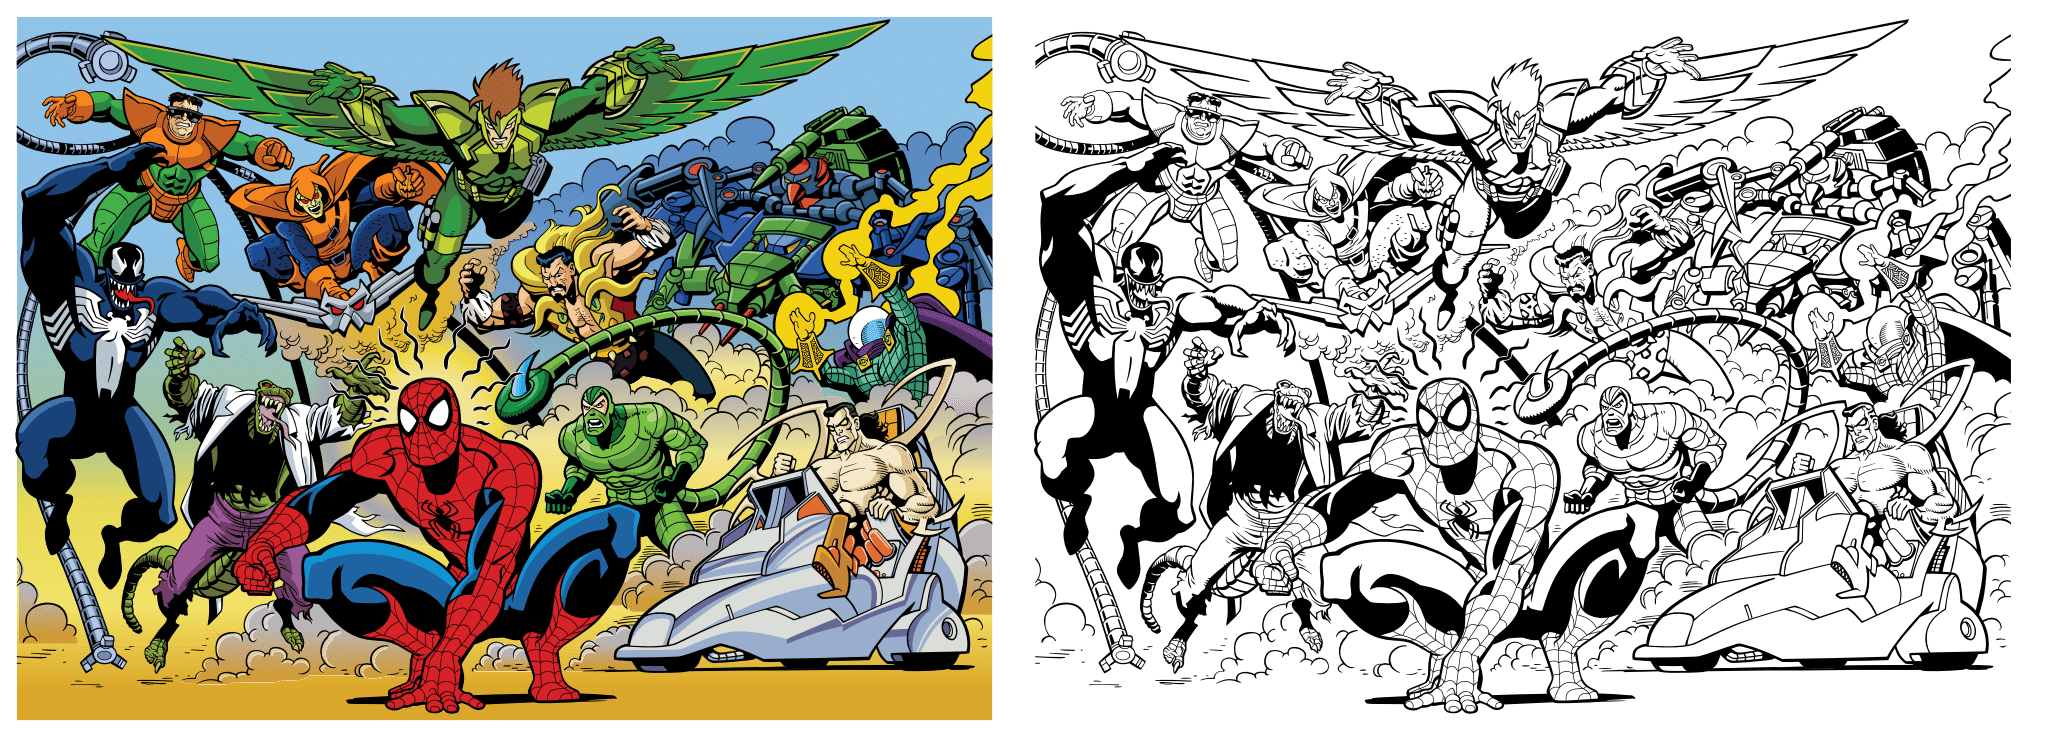 Color, B&amp;W illustrations of Spider-Man and famous super-villains. Credit Marvel.